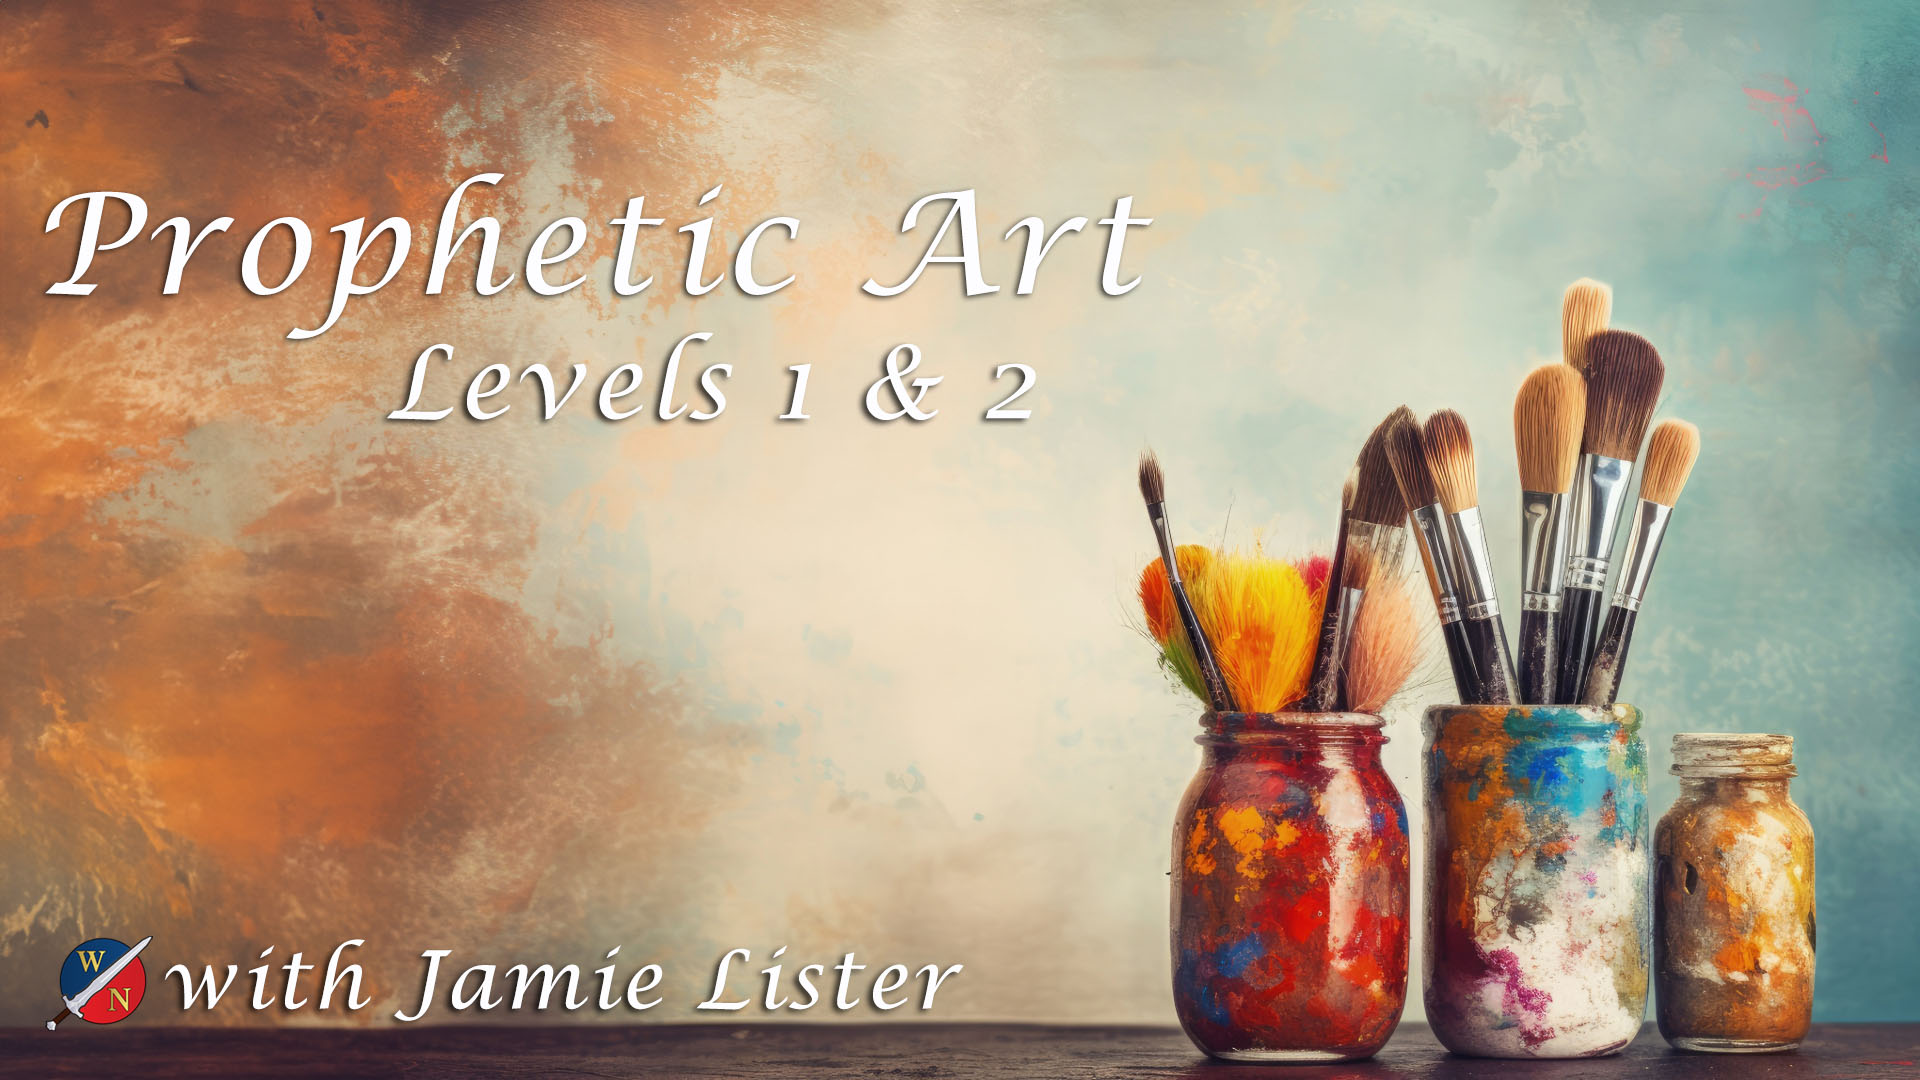 Prophetic Art Bundle with Jamie Lister